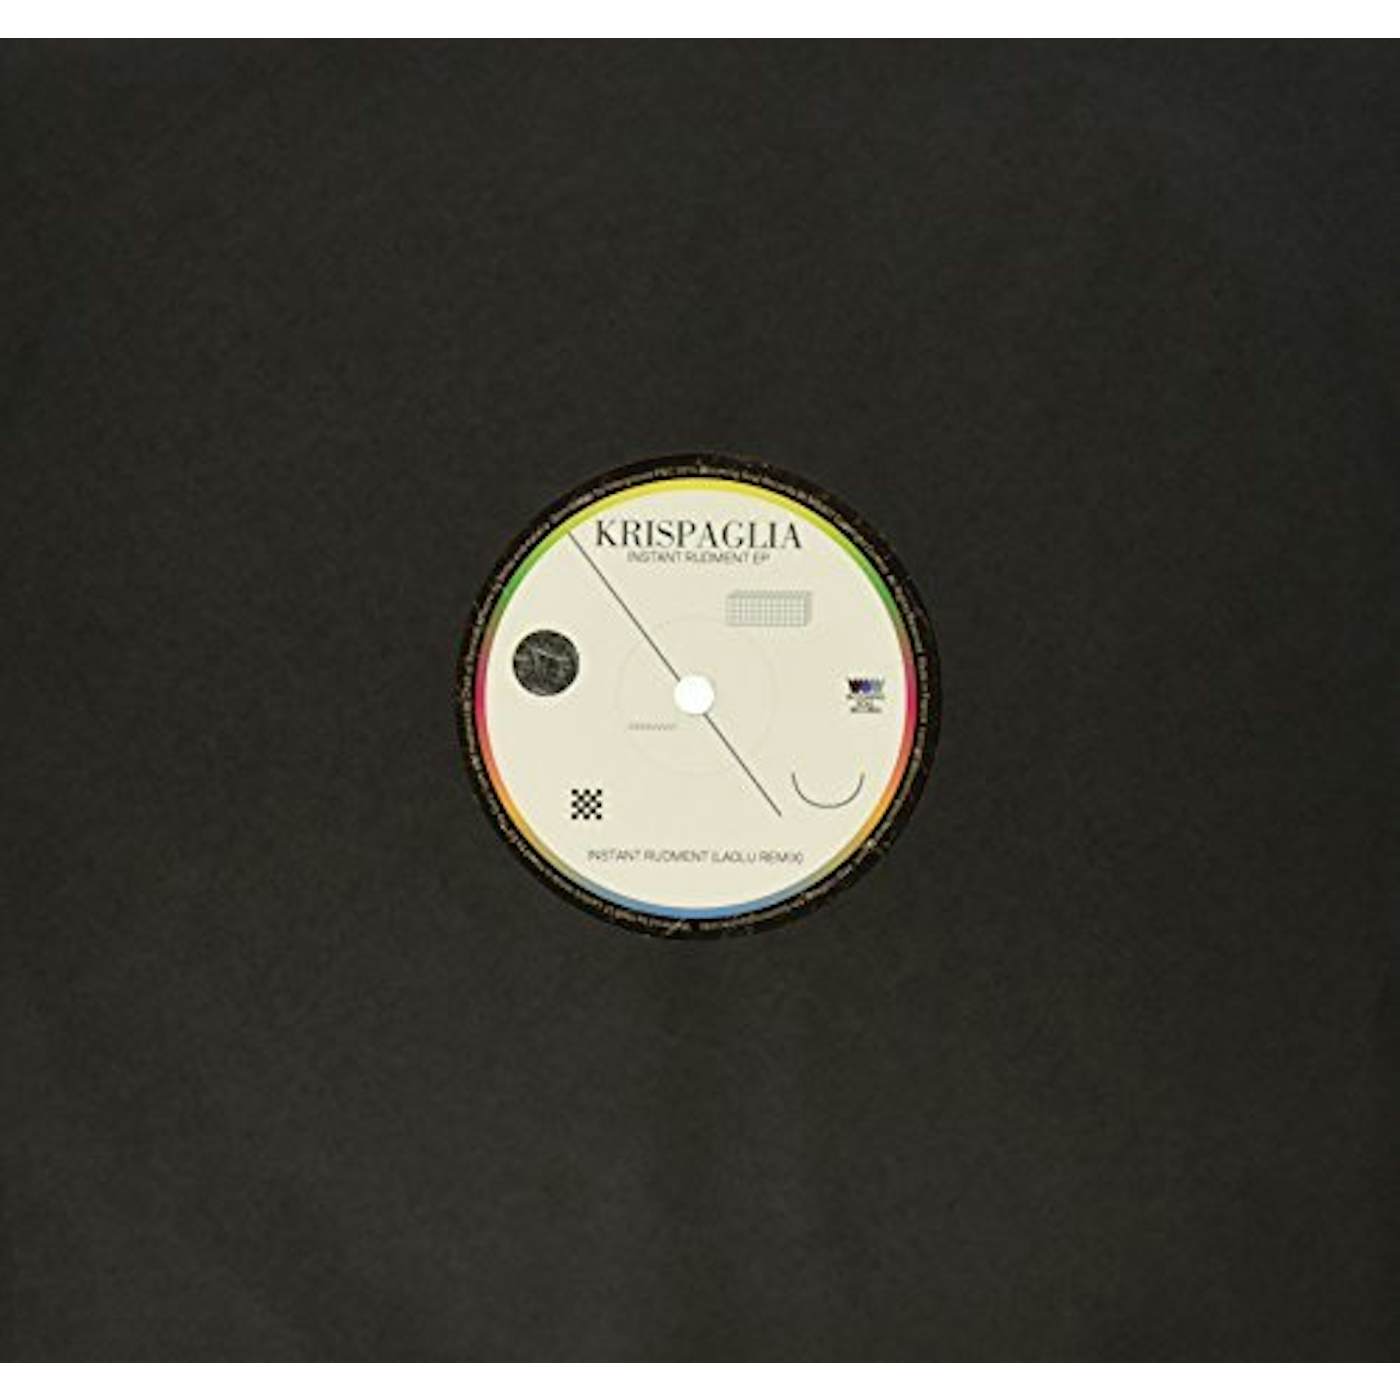 Krispaglia INSTANT RUDMENT Vinyl Record